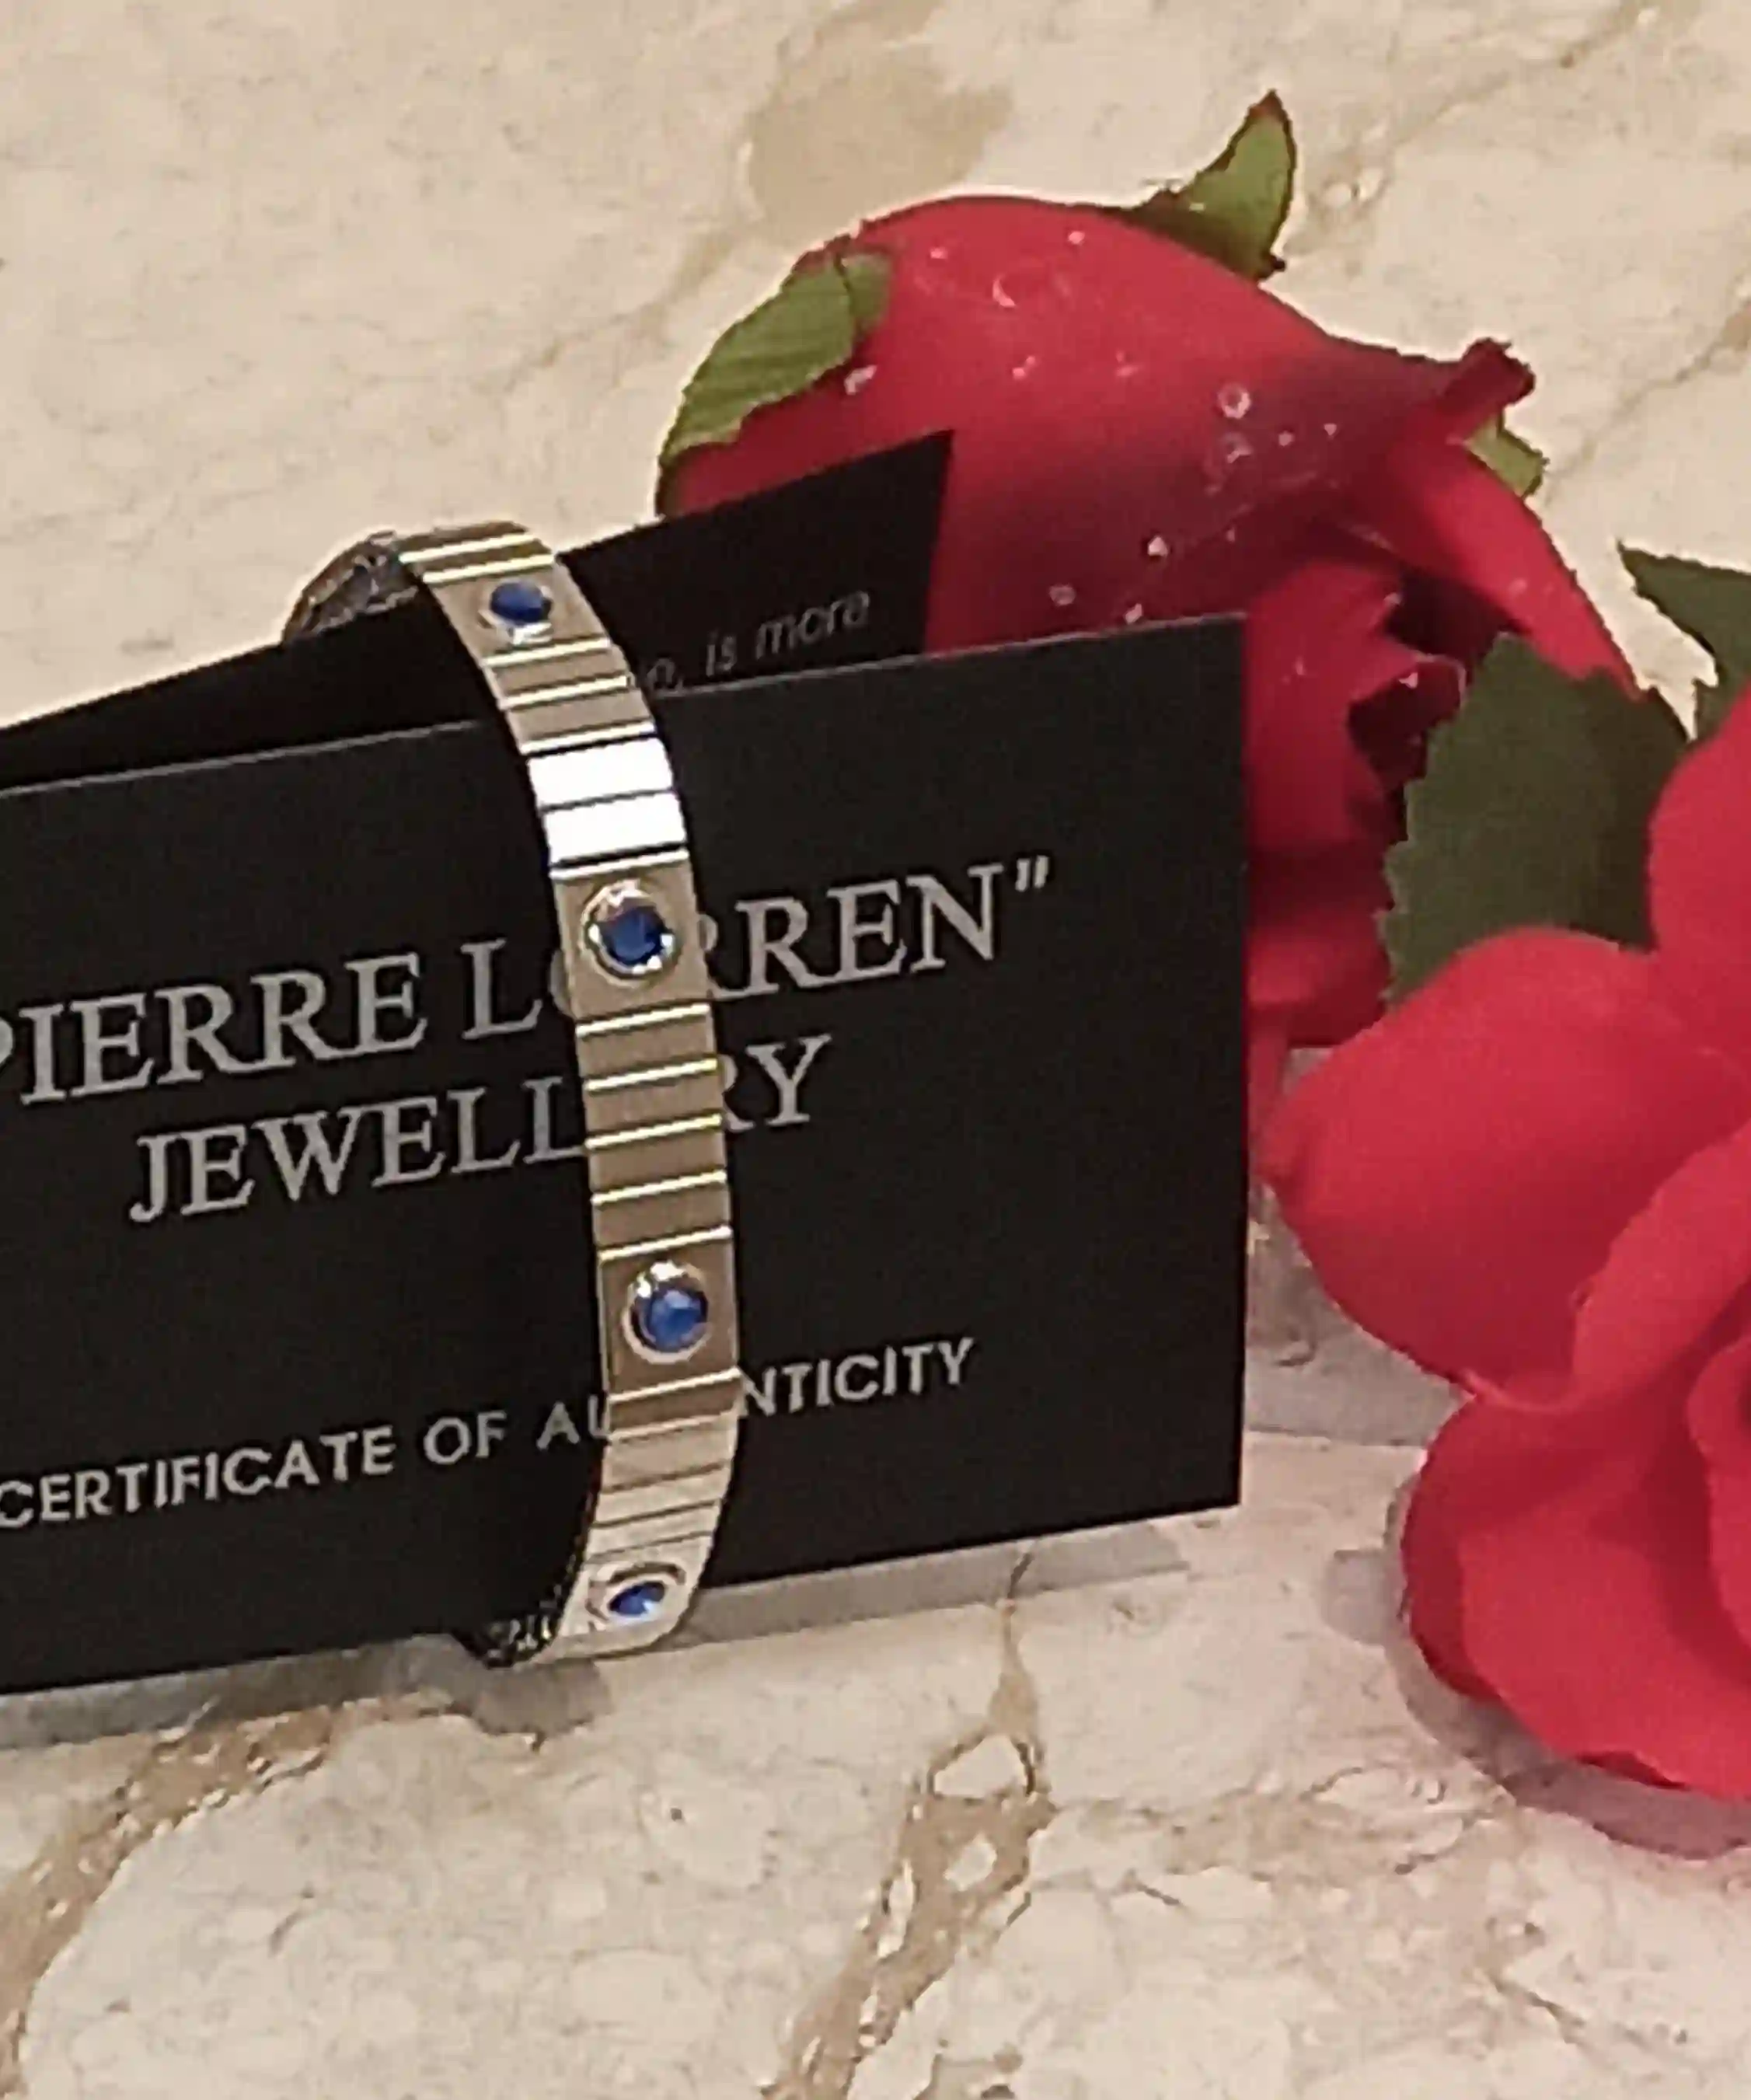 Unisex Silver Sapphire bracelet /Couples Bracelet Gift/Father Daughter Bracelet/His her Bracelet/Bracelet for best friends/His Hers Bracelet 